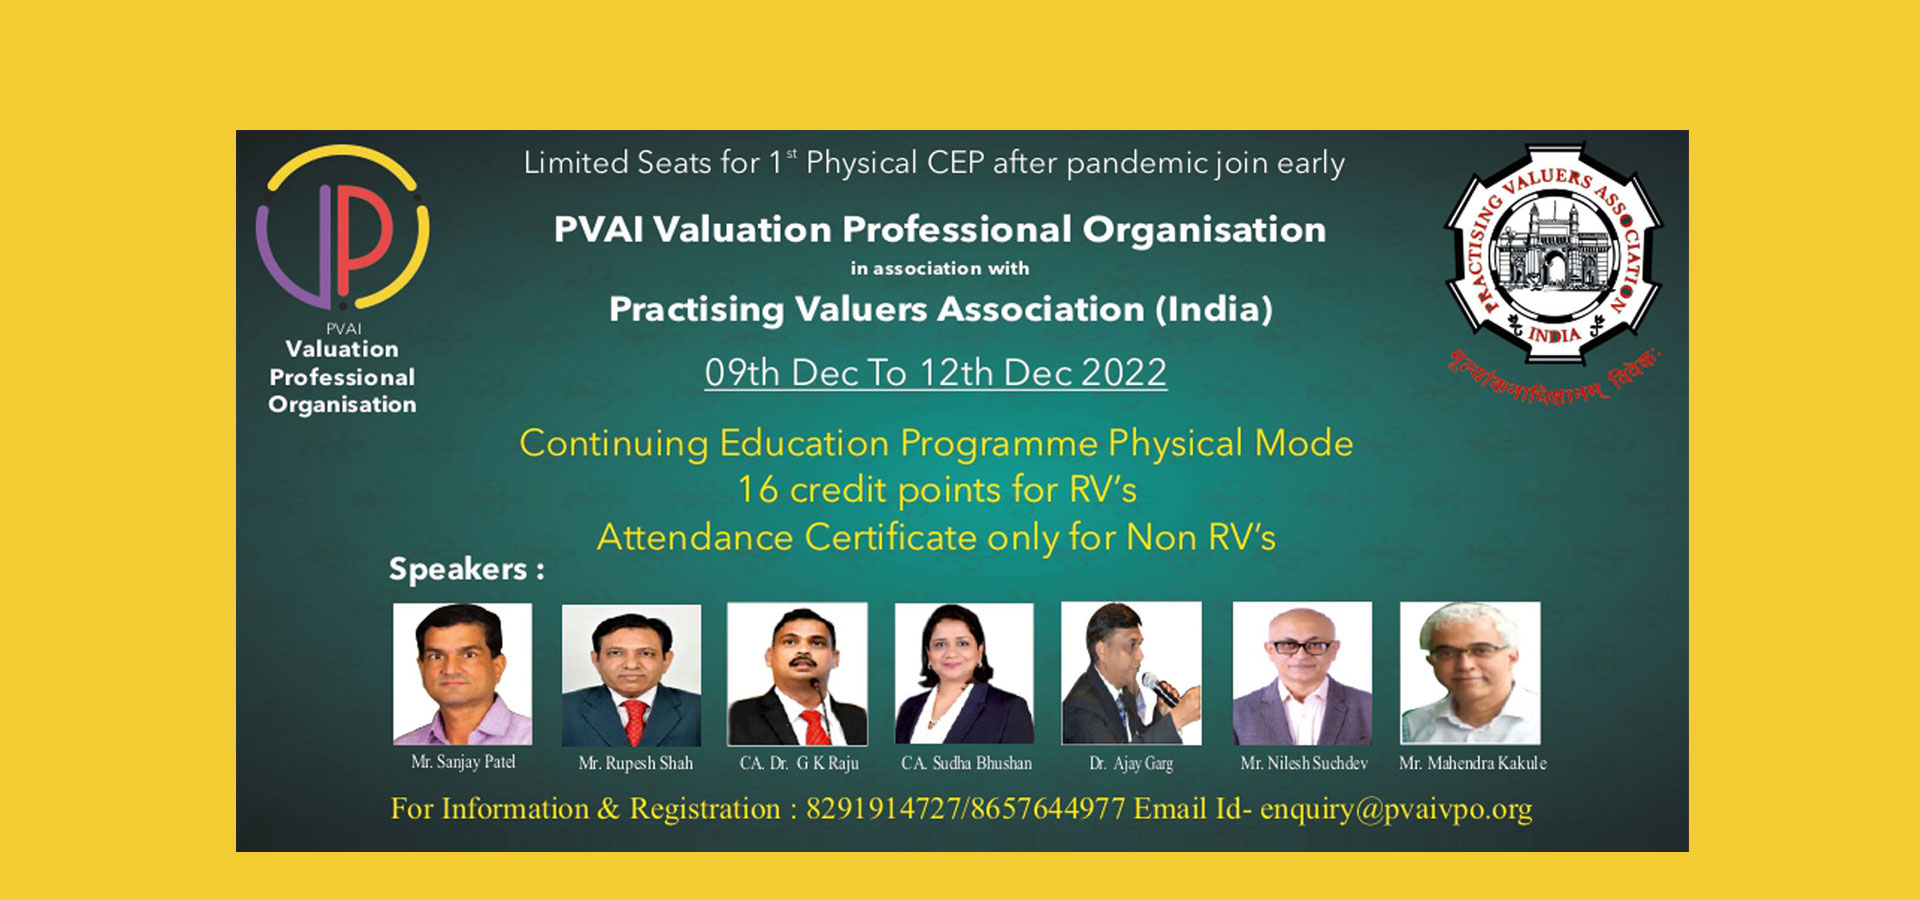 PVAI VALUATION PROFESSIONAL ORGANISATION